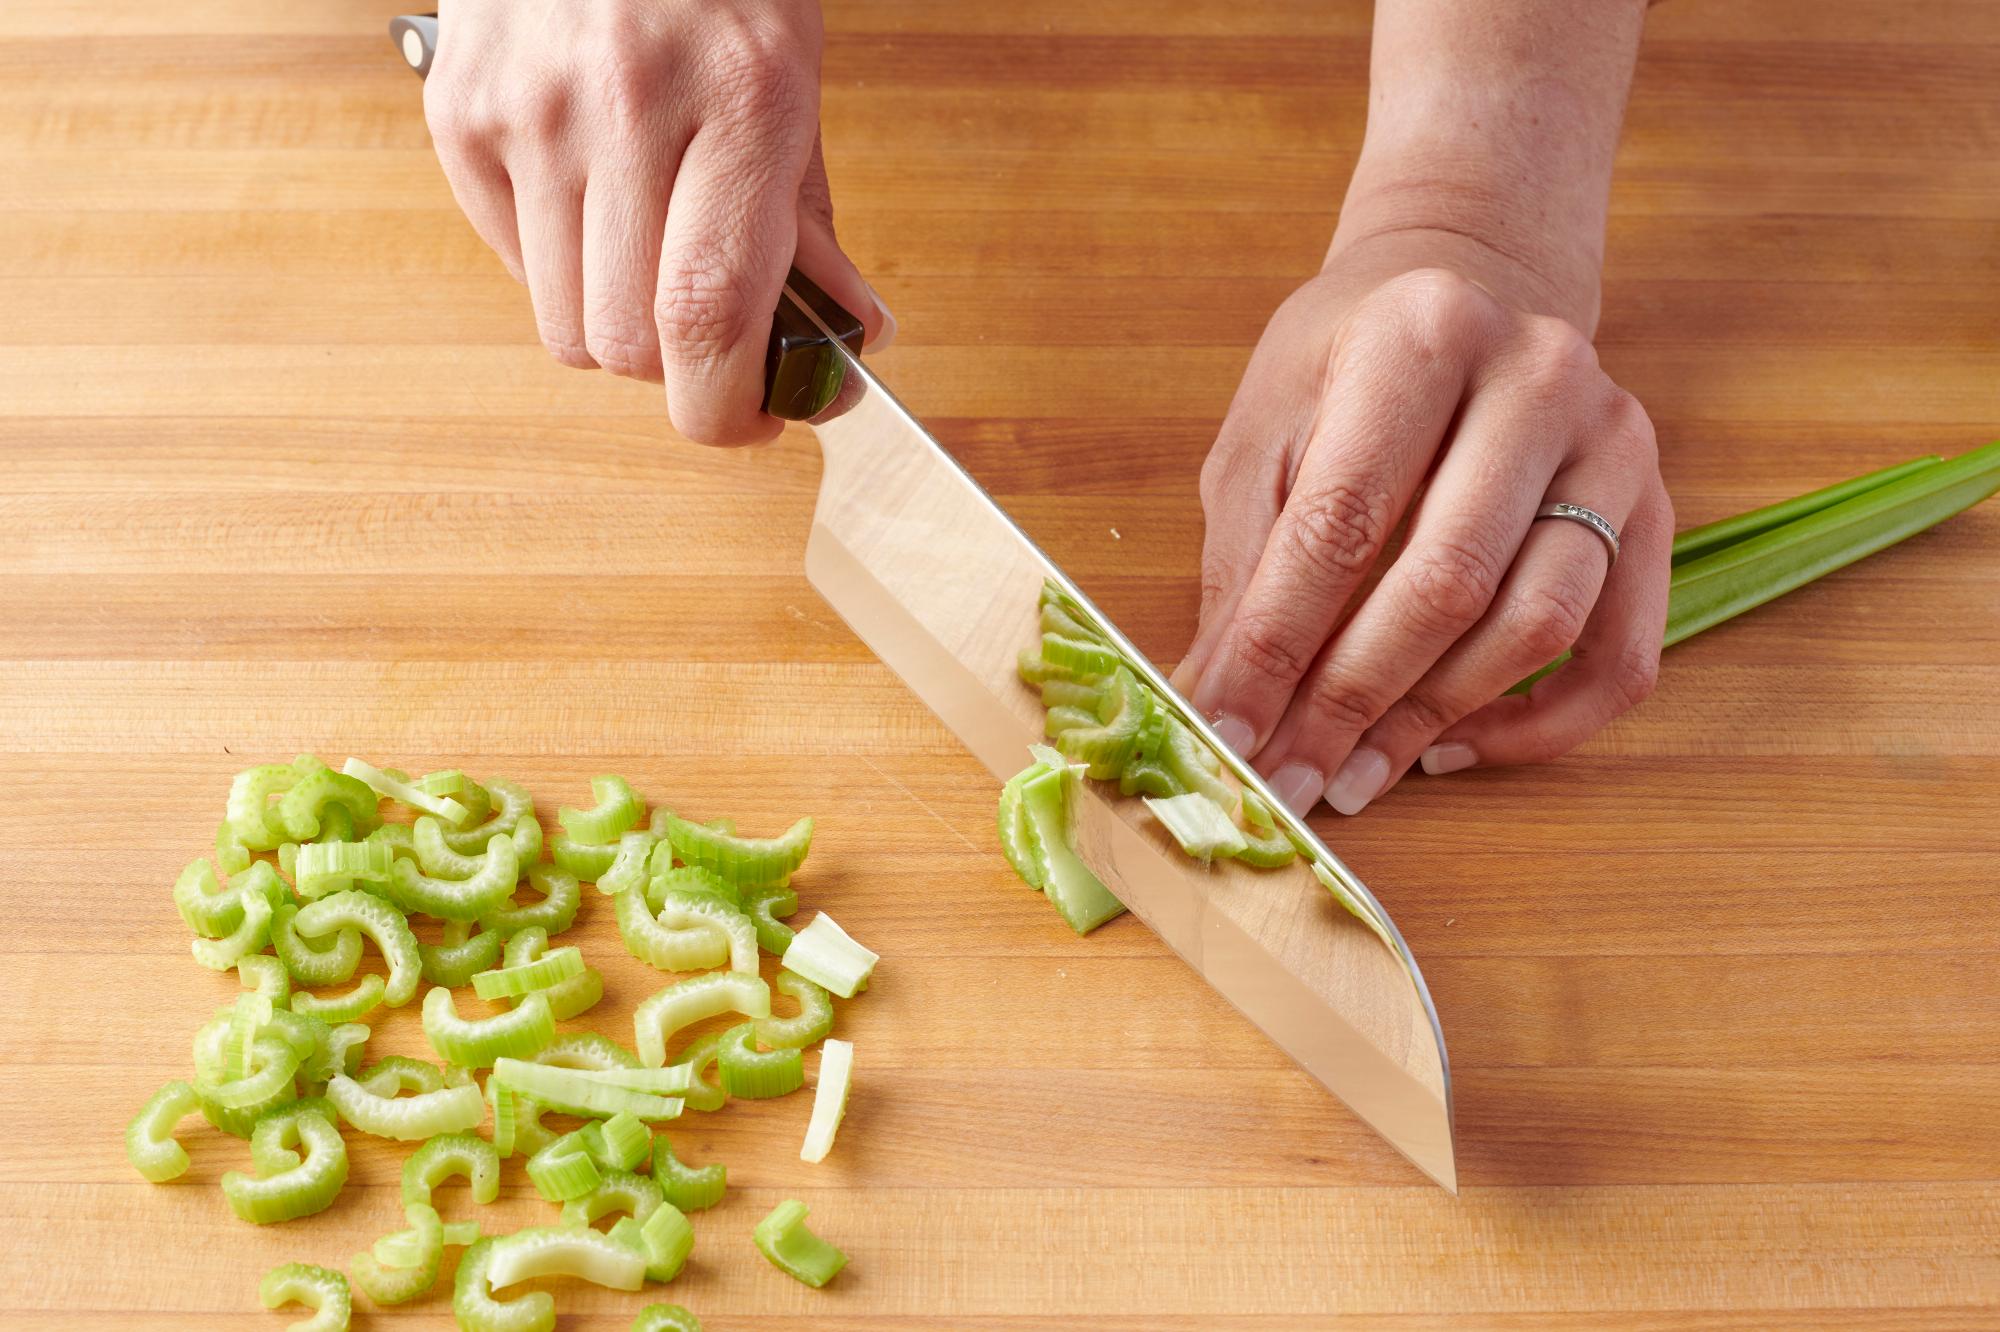 Slicing the celery with a Santoku.